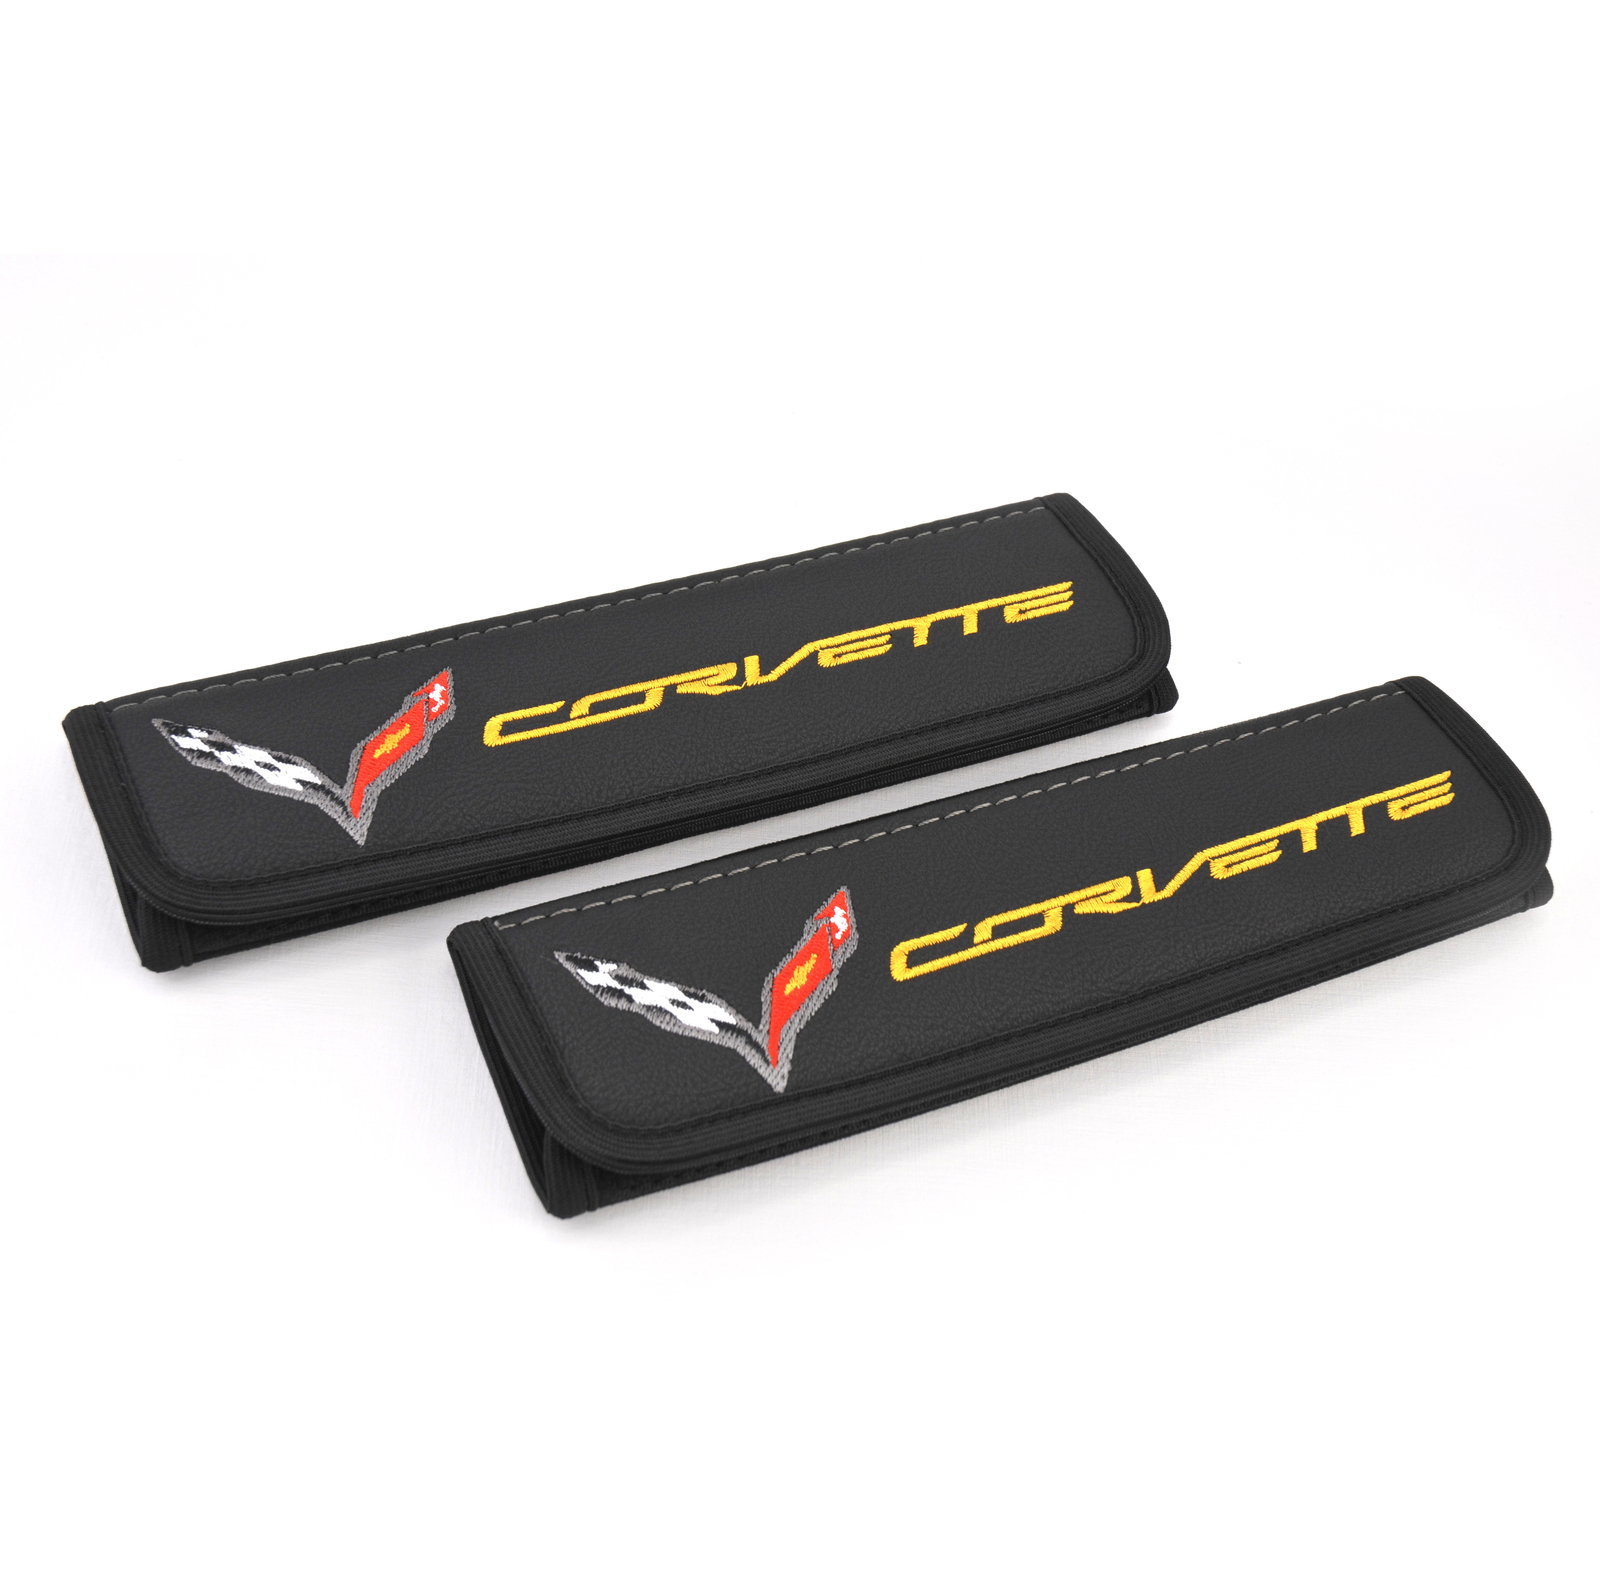 Corvette C7 seat belt covers Leather shoulder pads Accessories with emblem - $30.00